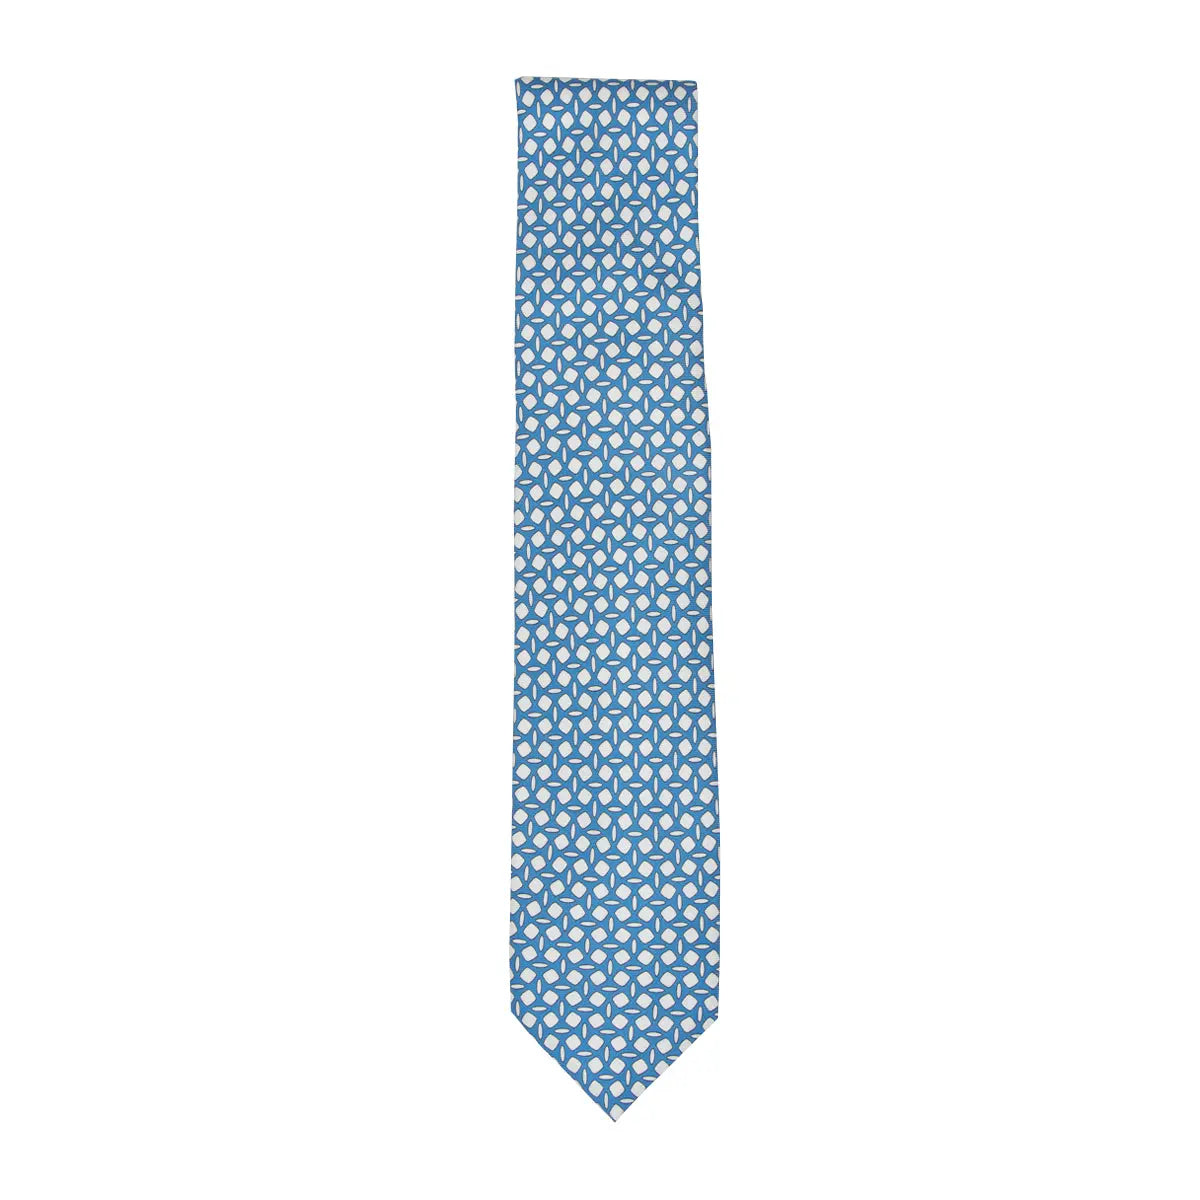 Blue & White Oval 100% Silk Tie  Robert Old   